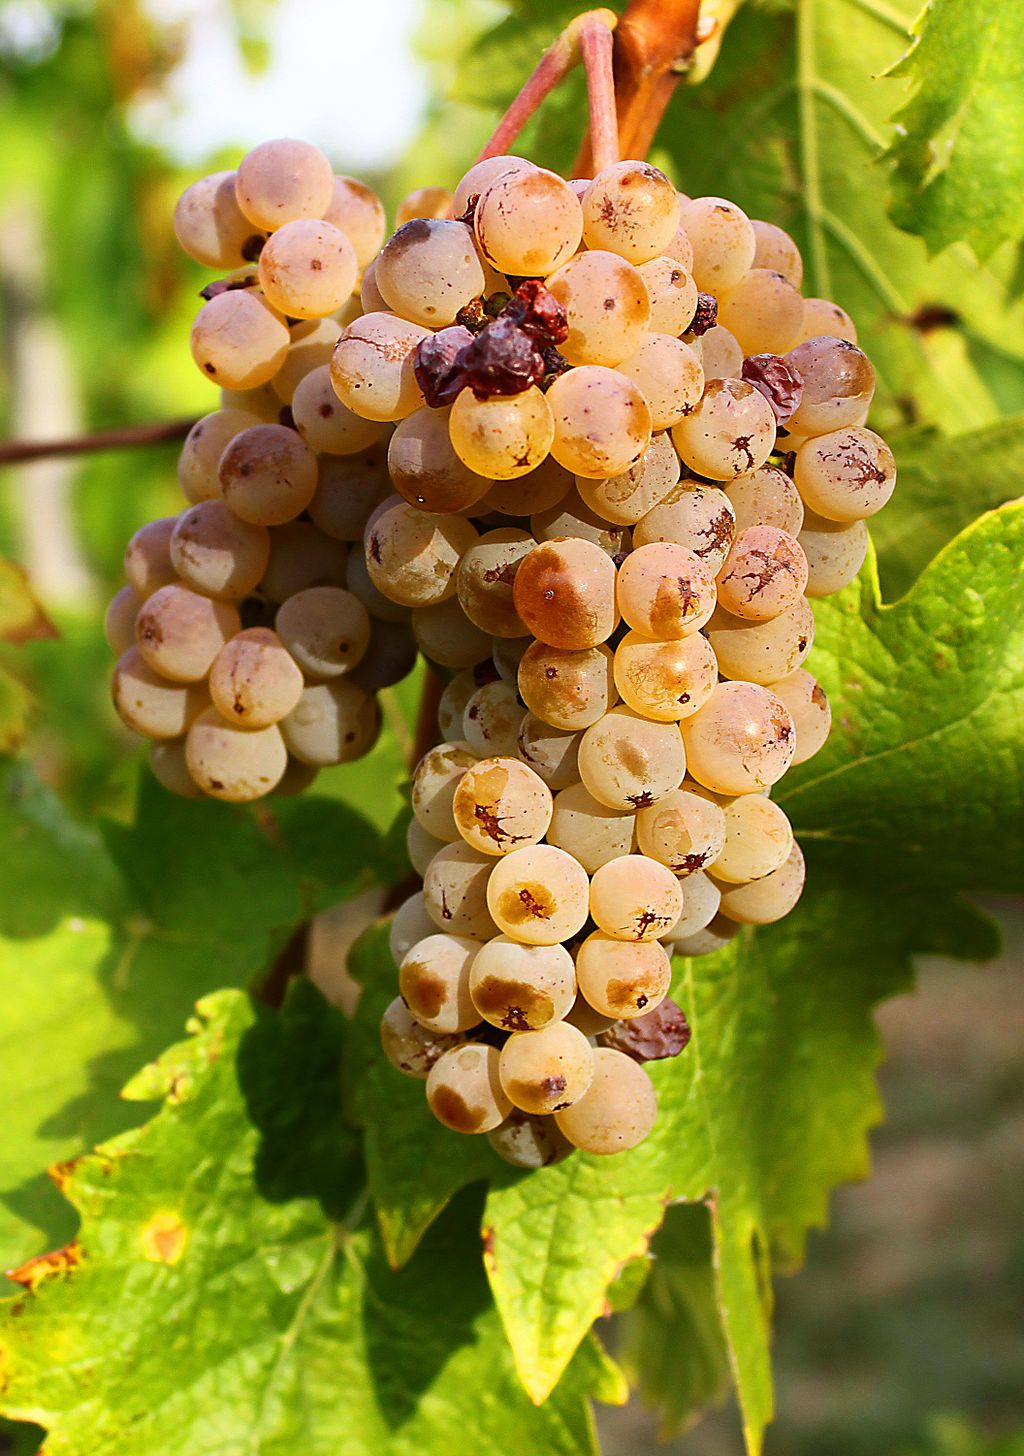 Untapped Potential: Croatian Graševina wine on world stage 